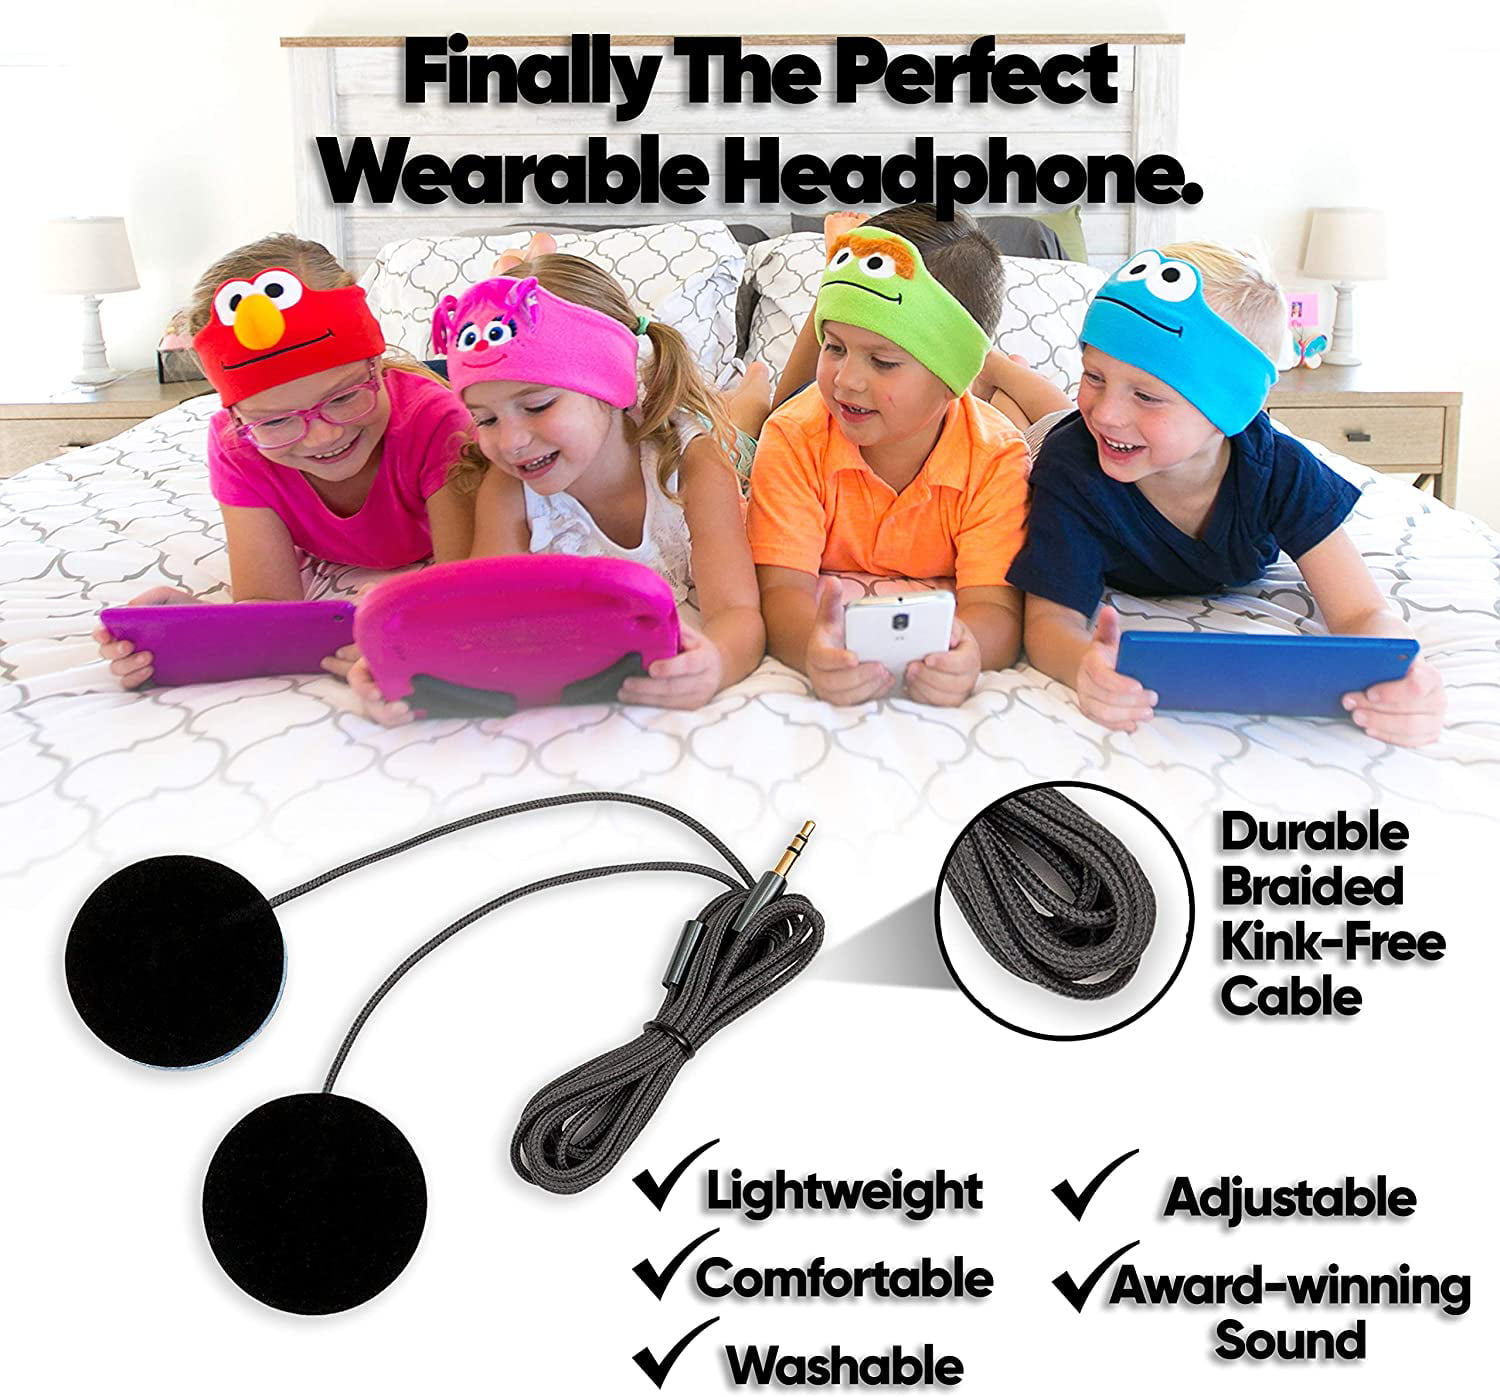 Oscar Sesame Street Kids Headphones by CozyPhones Home & Travel Perfect Childrens Earphones for School Volume Limited with Thin Speakers & Super Comfortable Soft Fleece Headband 